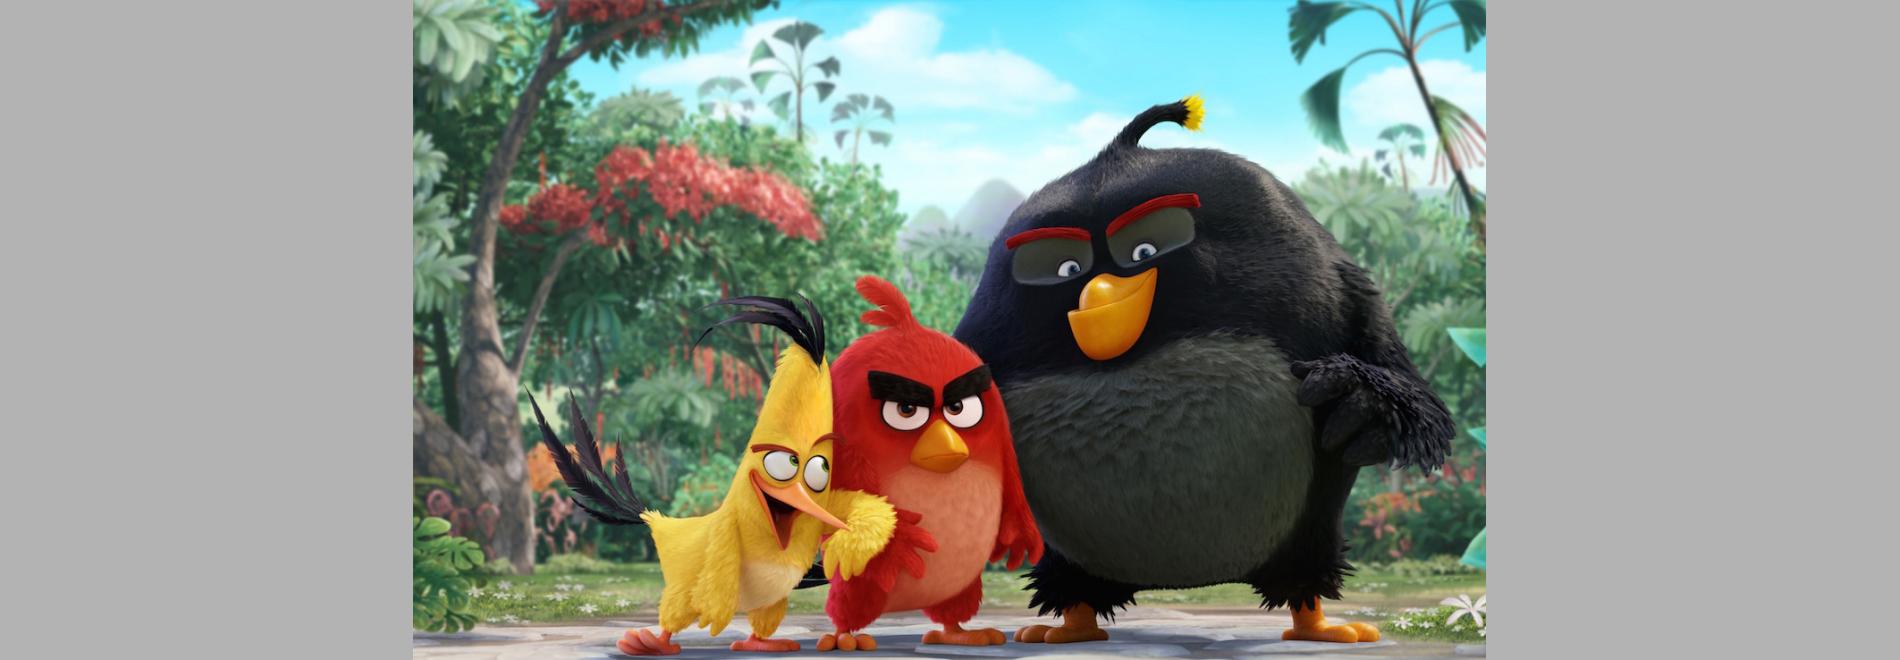 The Angry Birds Movie (Clay Kaytis, Fergal Reilly, 2016)